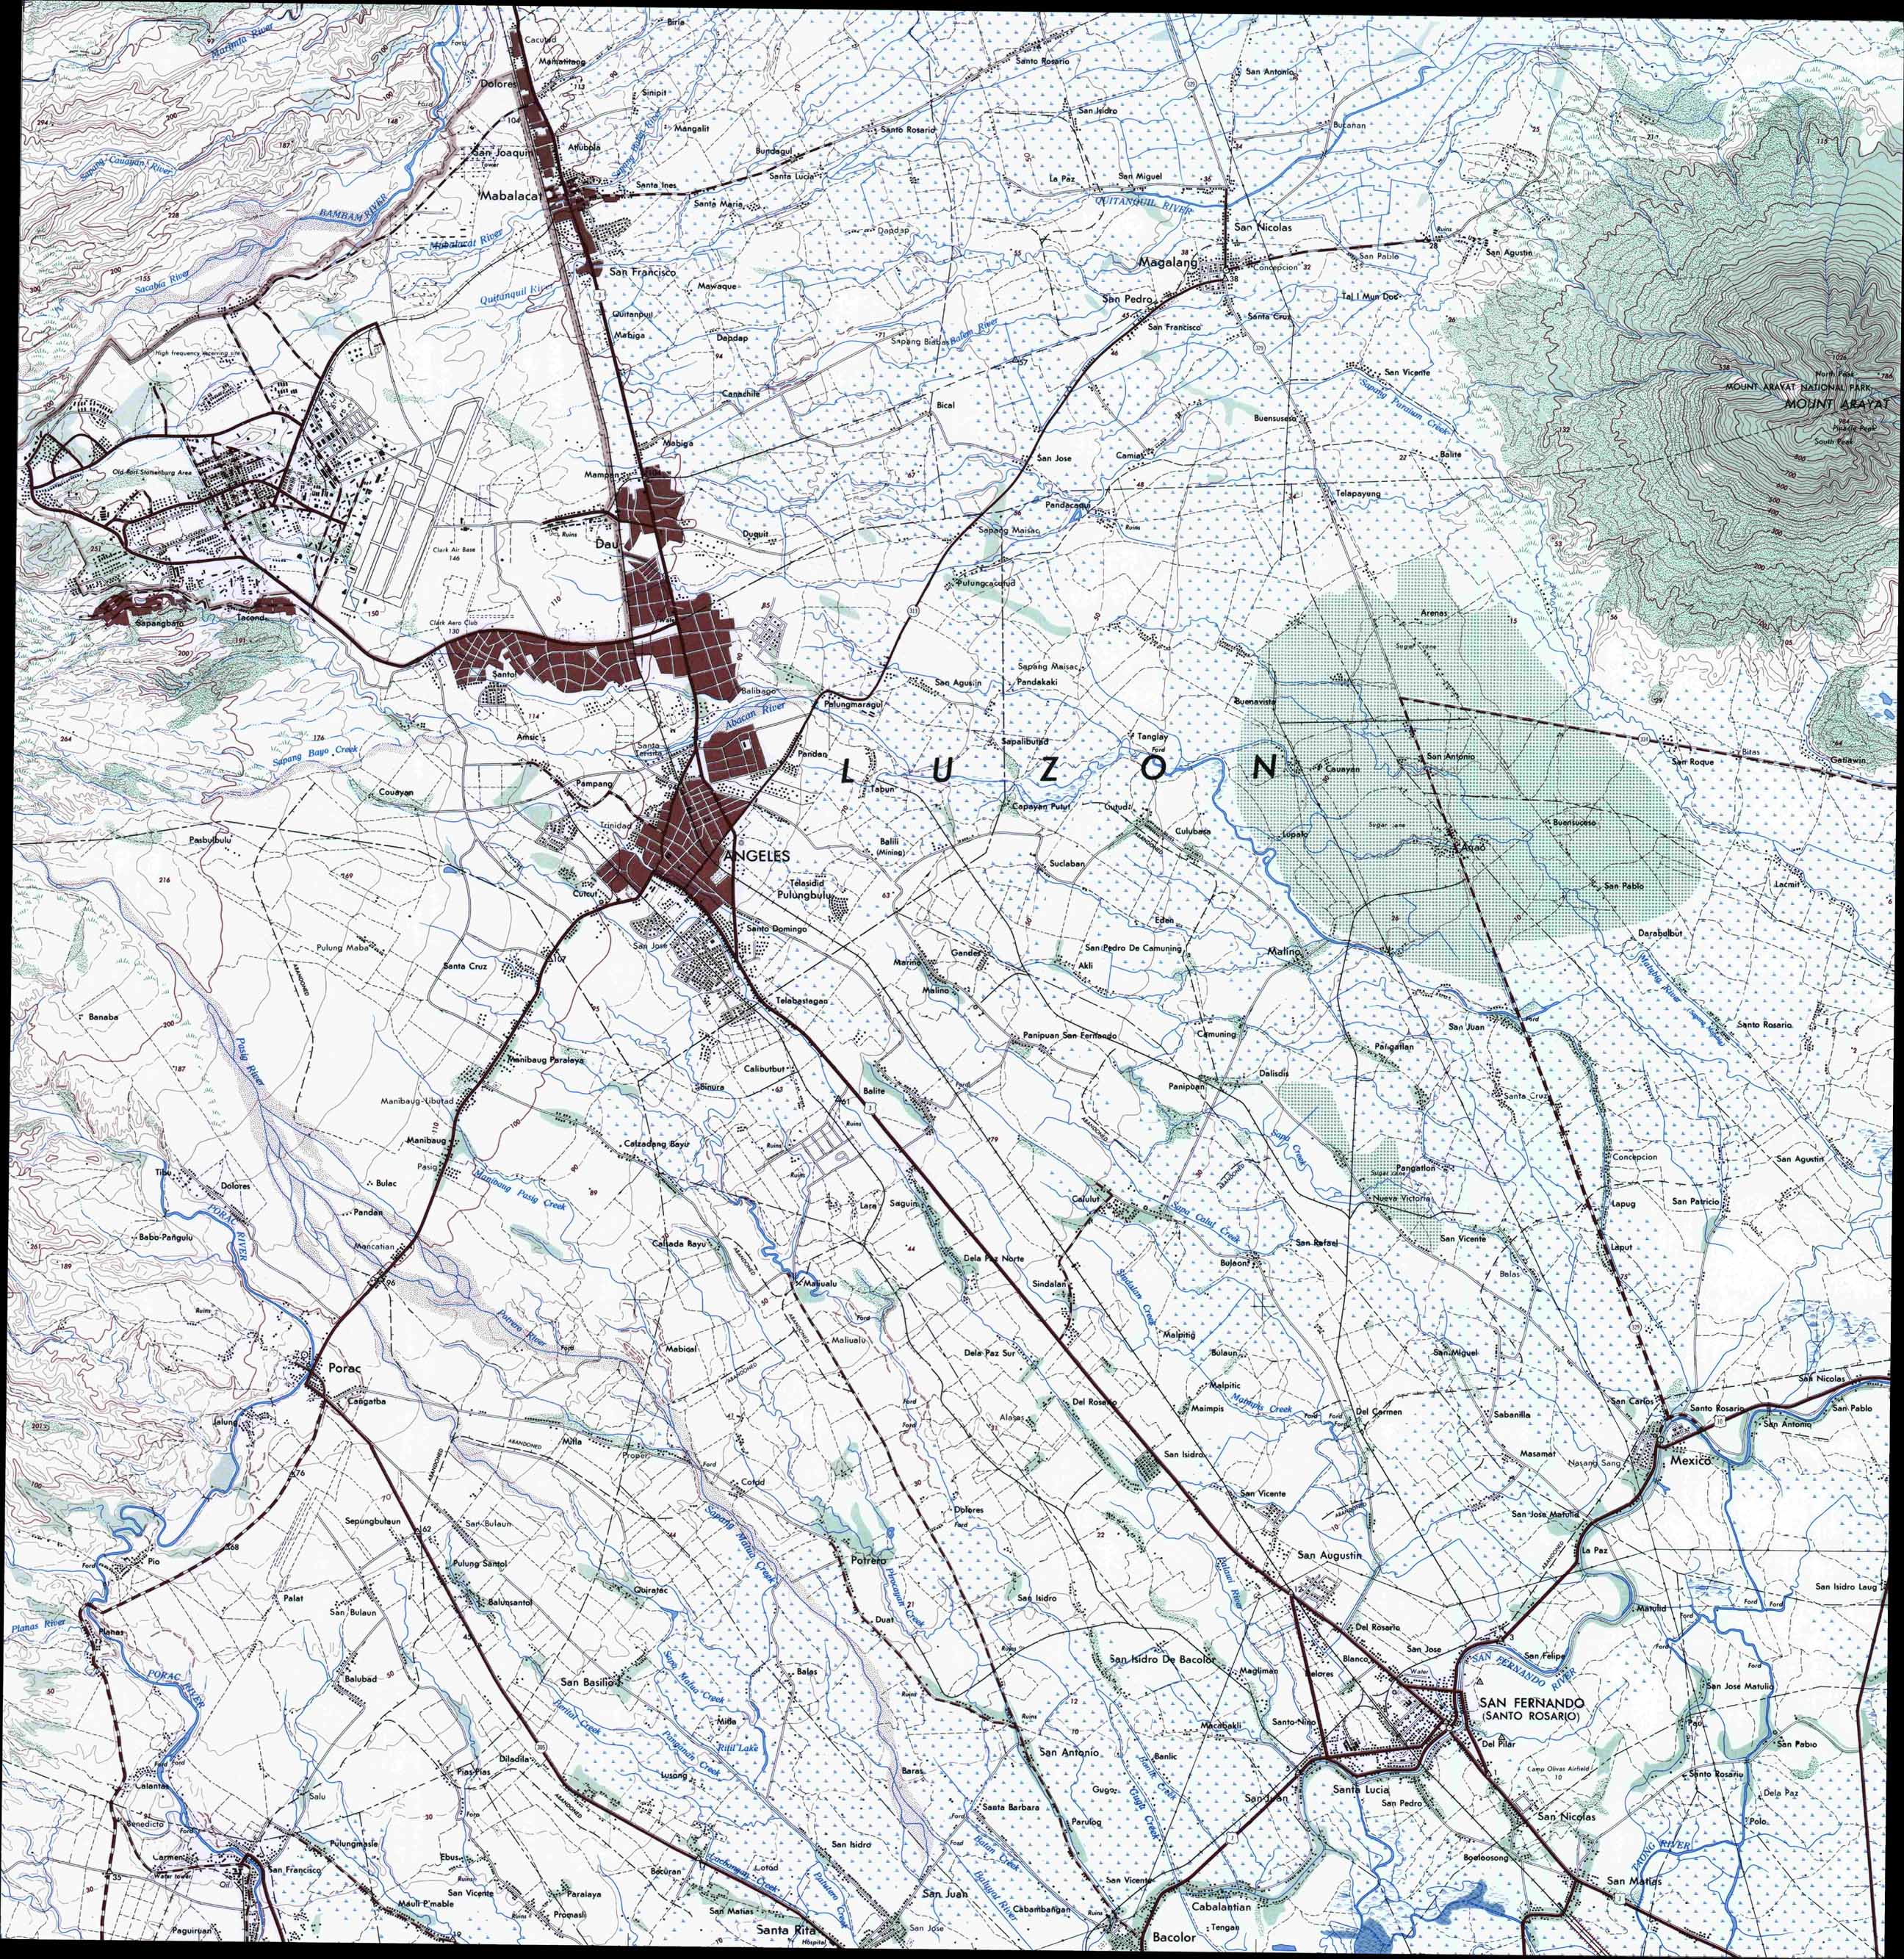 images/Maps/TopoMaps/3131-iii-BM-TP.jpg